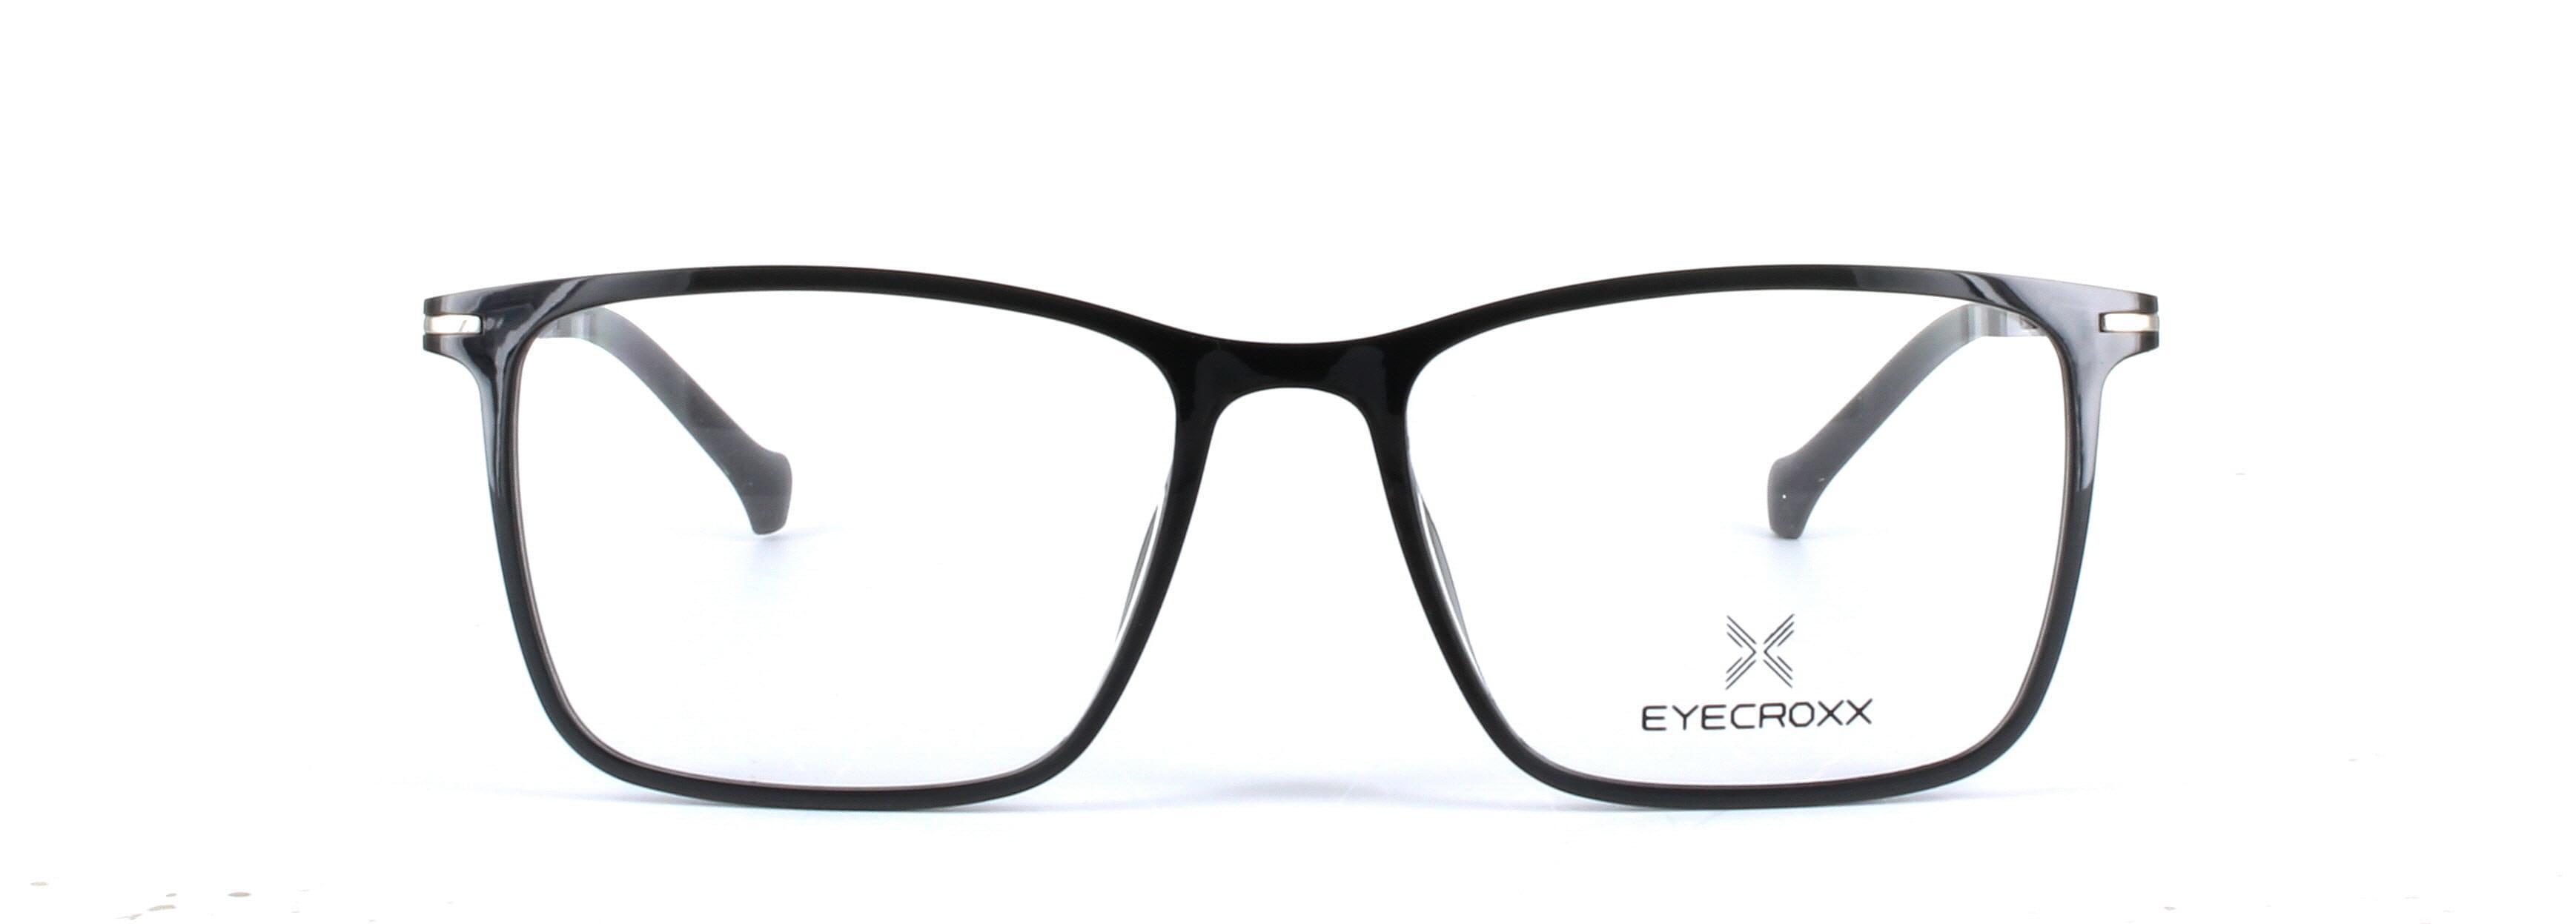 Eyecroxx 588 Grey Full Rim Plastic Glasses - Image View 5